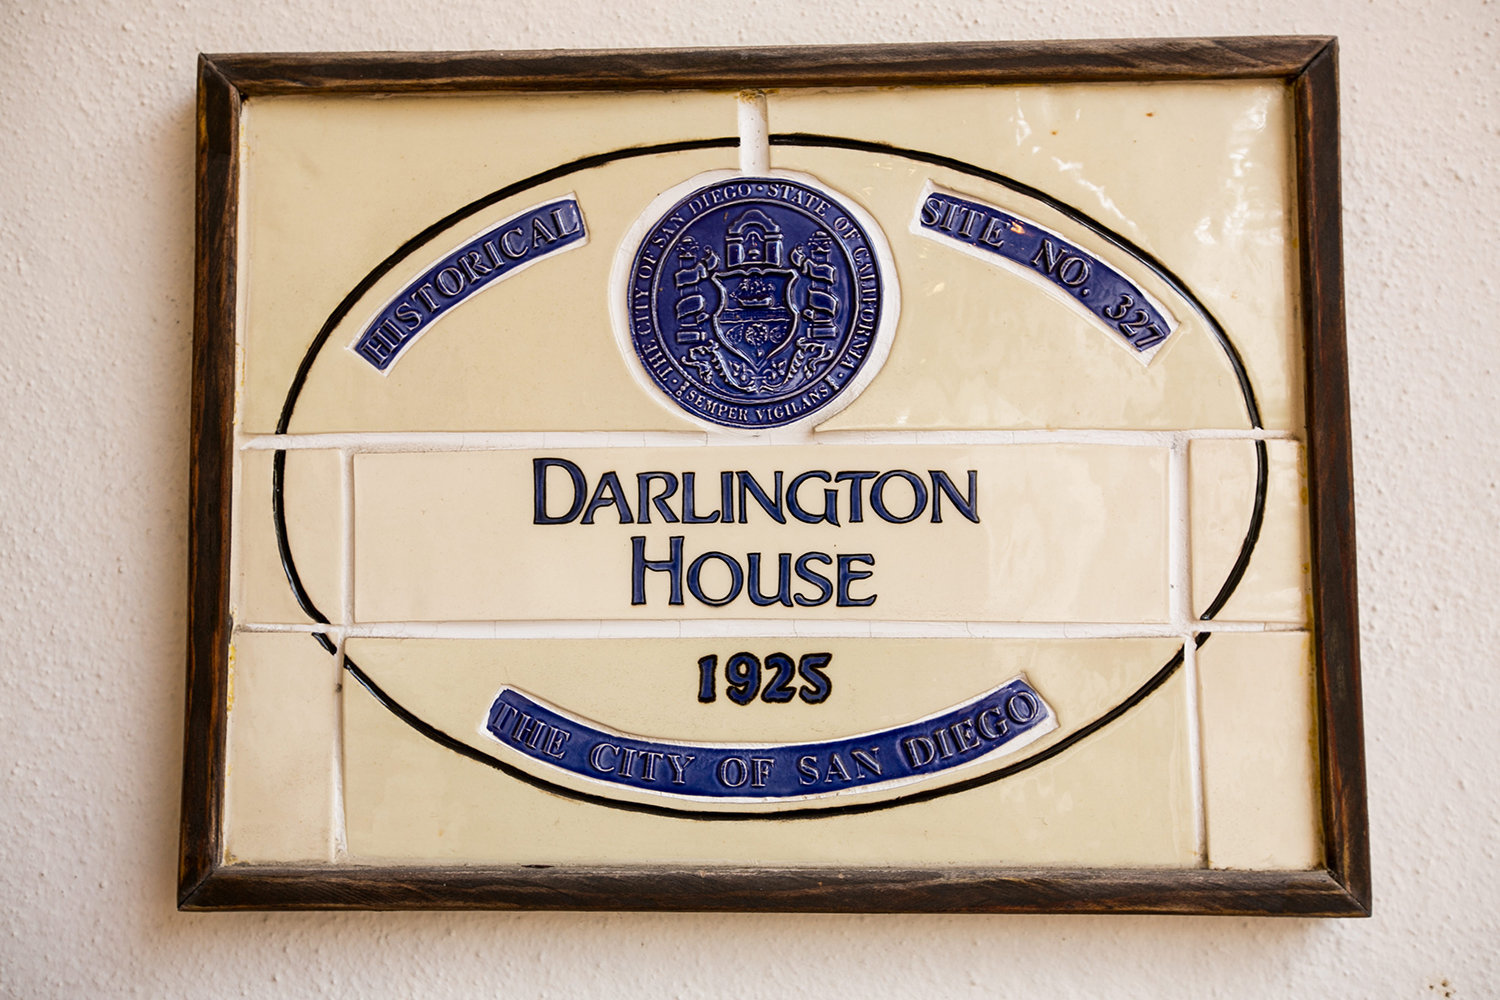 Darlington house